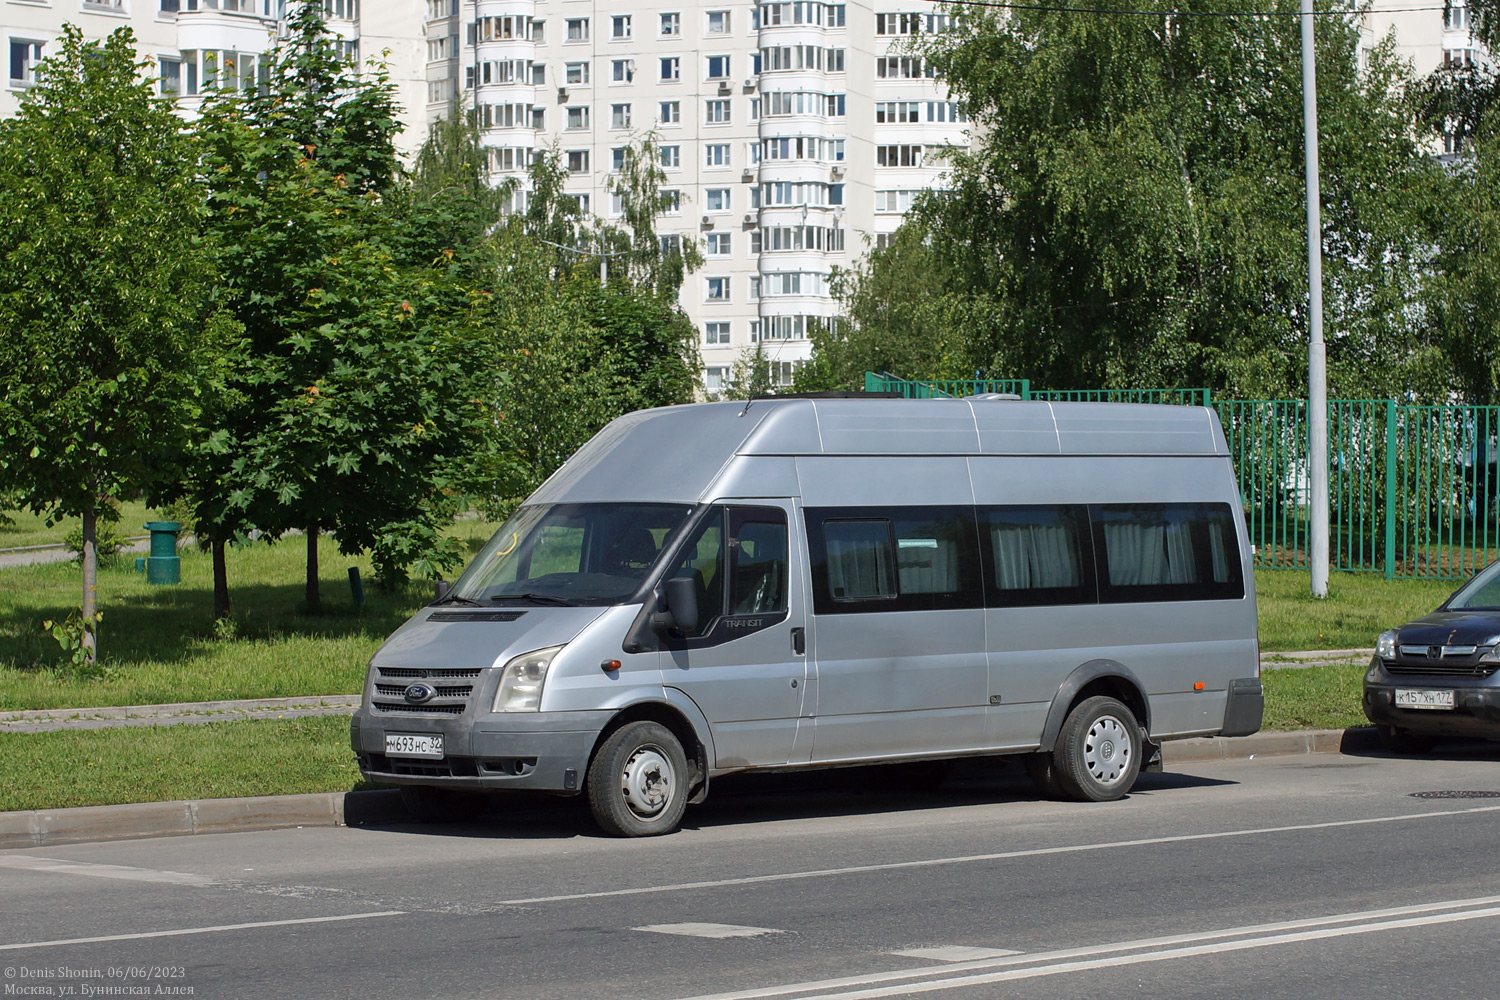 Brjanszki terület, Imya-M-3006 (Z9S) (Ford Transit) sz.: М 693 НС 32